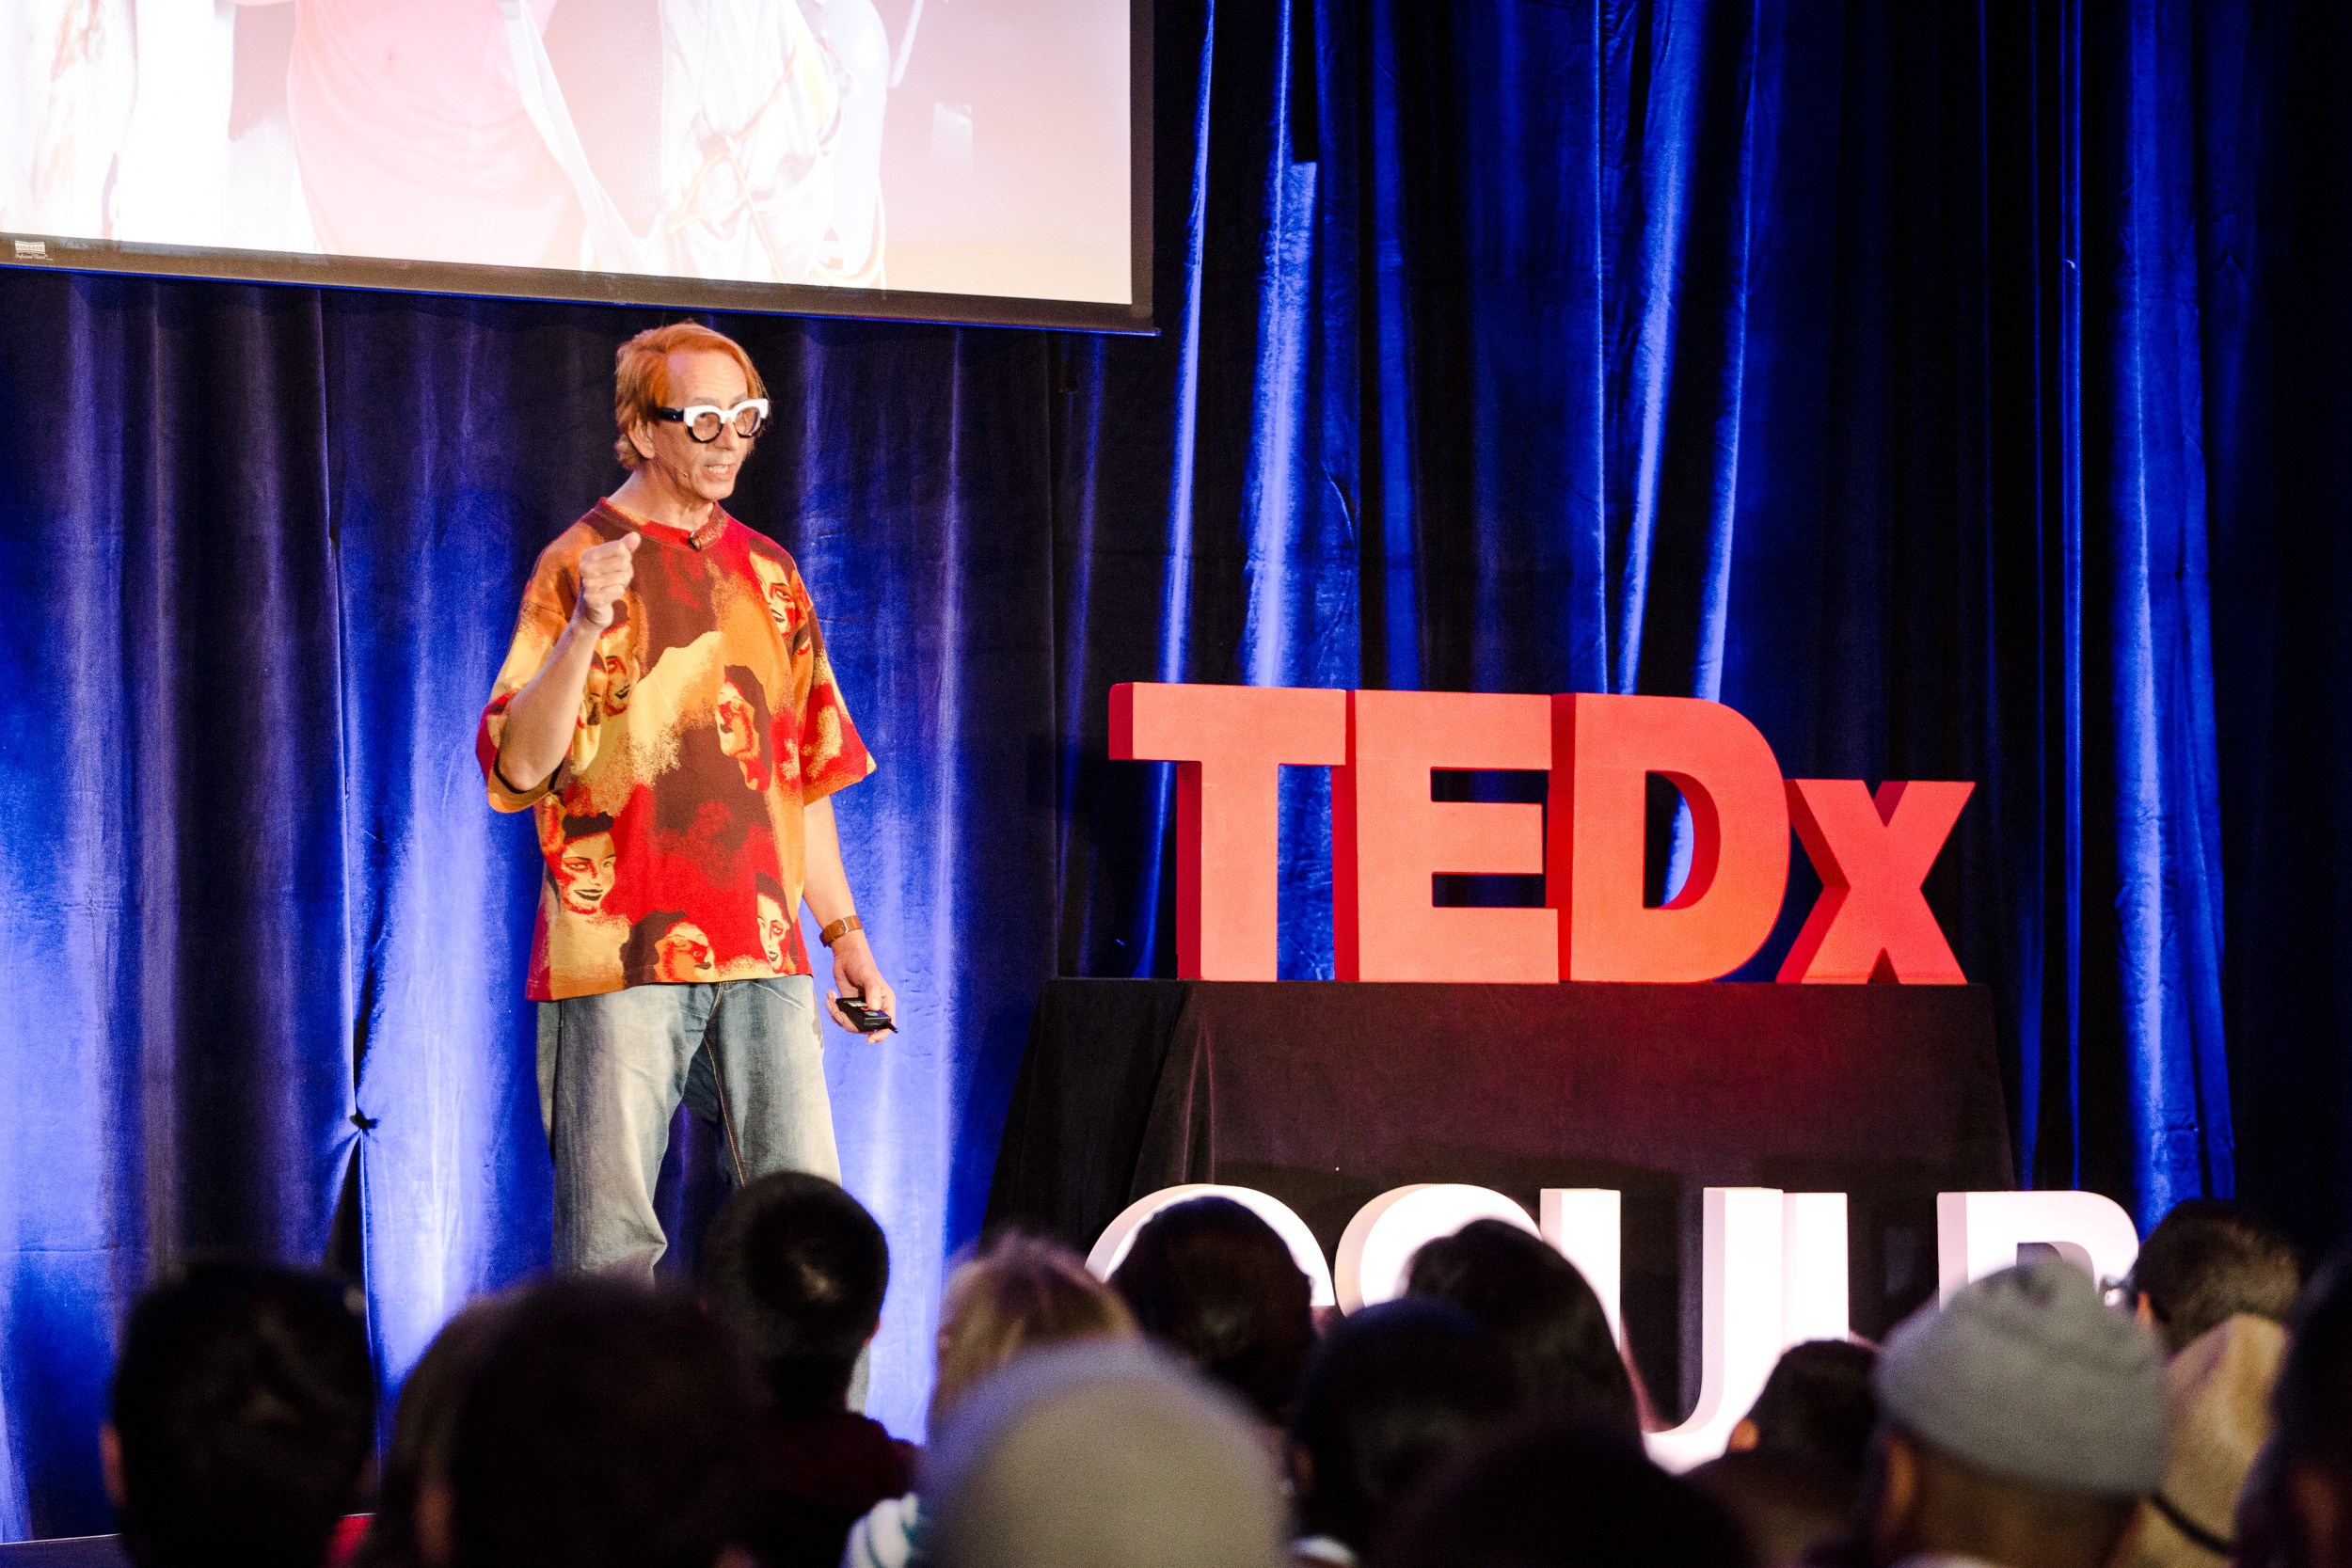 Glenn Zucman on stage at TEDxCSULB